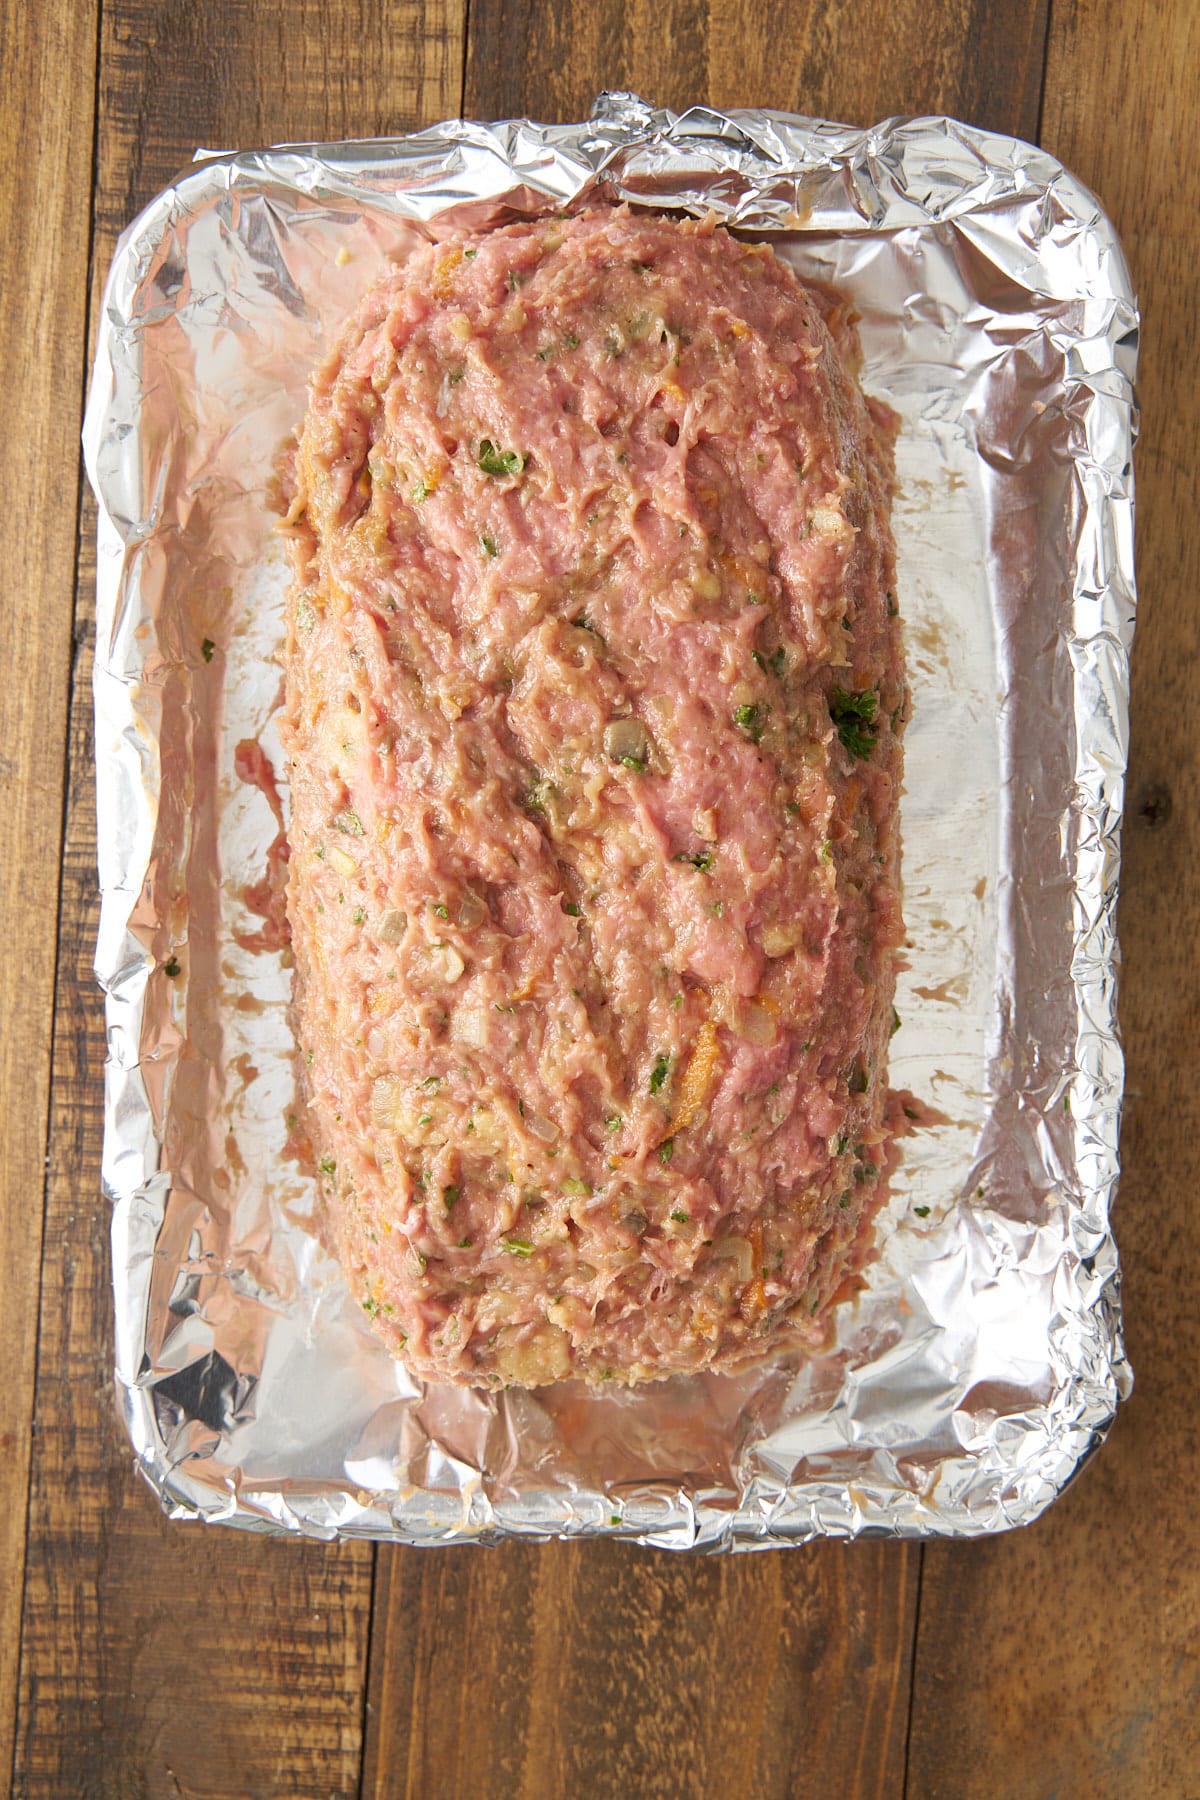 formed turkey into meatloaf before baking